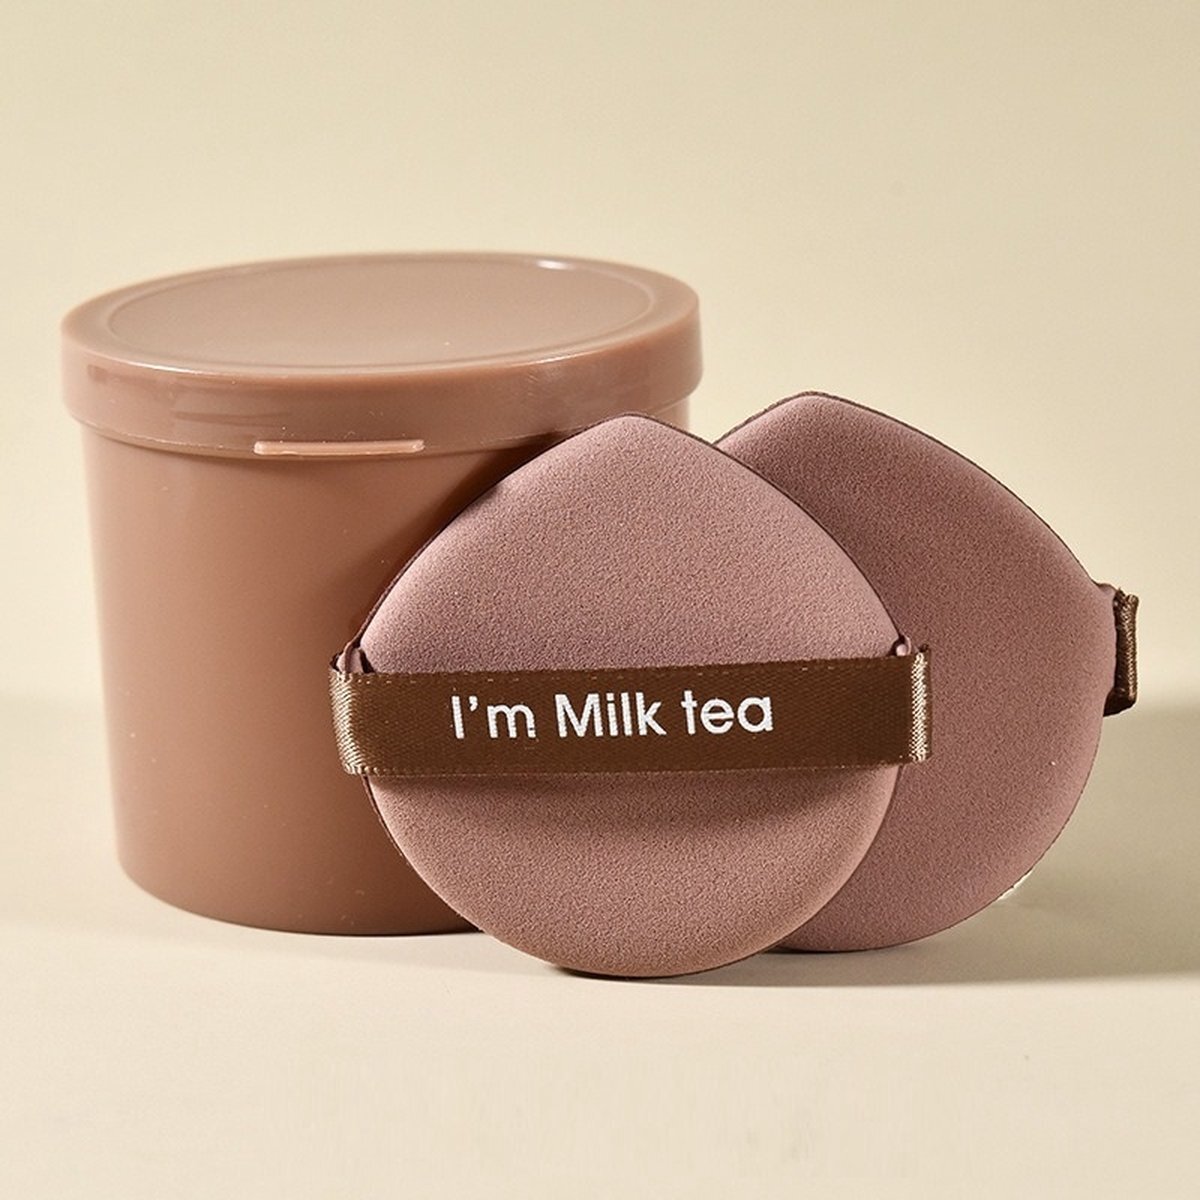 Elemental Goods 7 Stuks Make-up Sponsjes Druppelvorm – Milk Tea – 5.5*6 cm – Poeder, Foundation, BB Cream